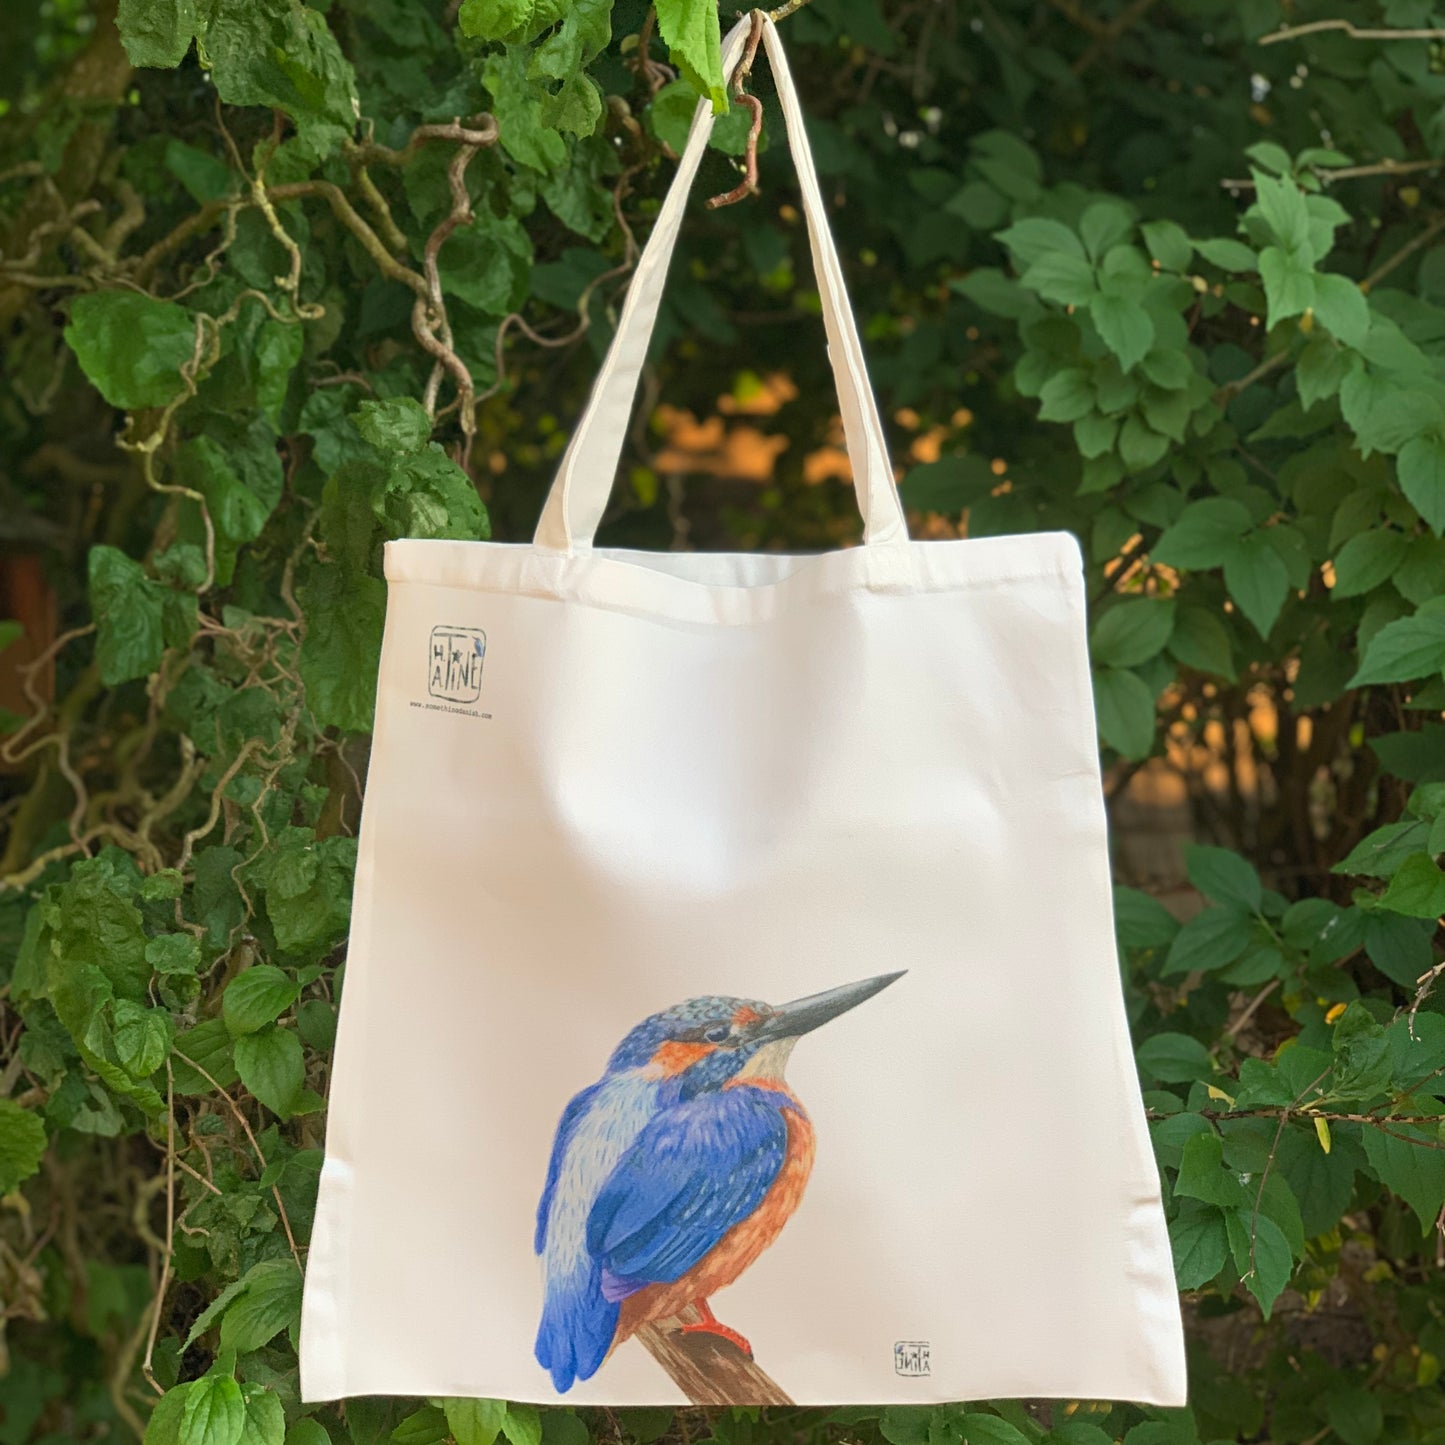 Isfugl net // Kingfisher tote bag